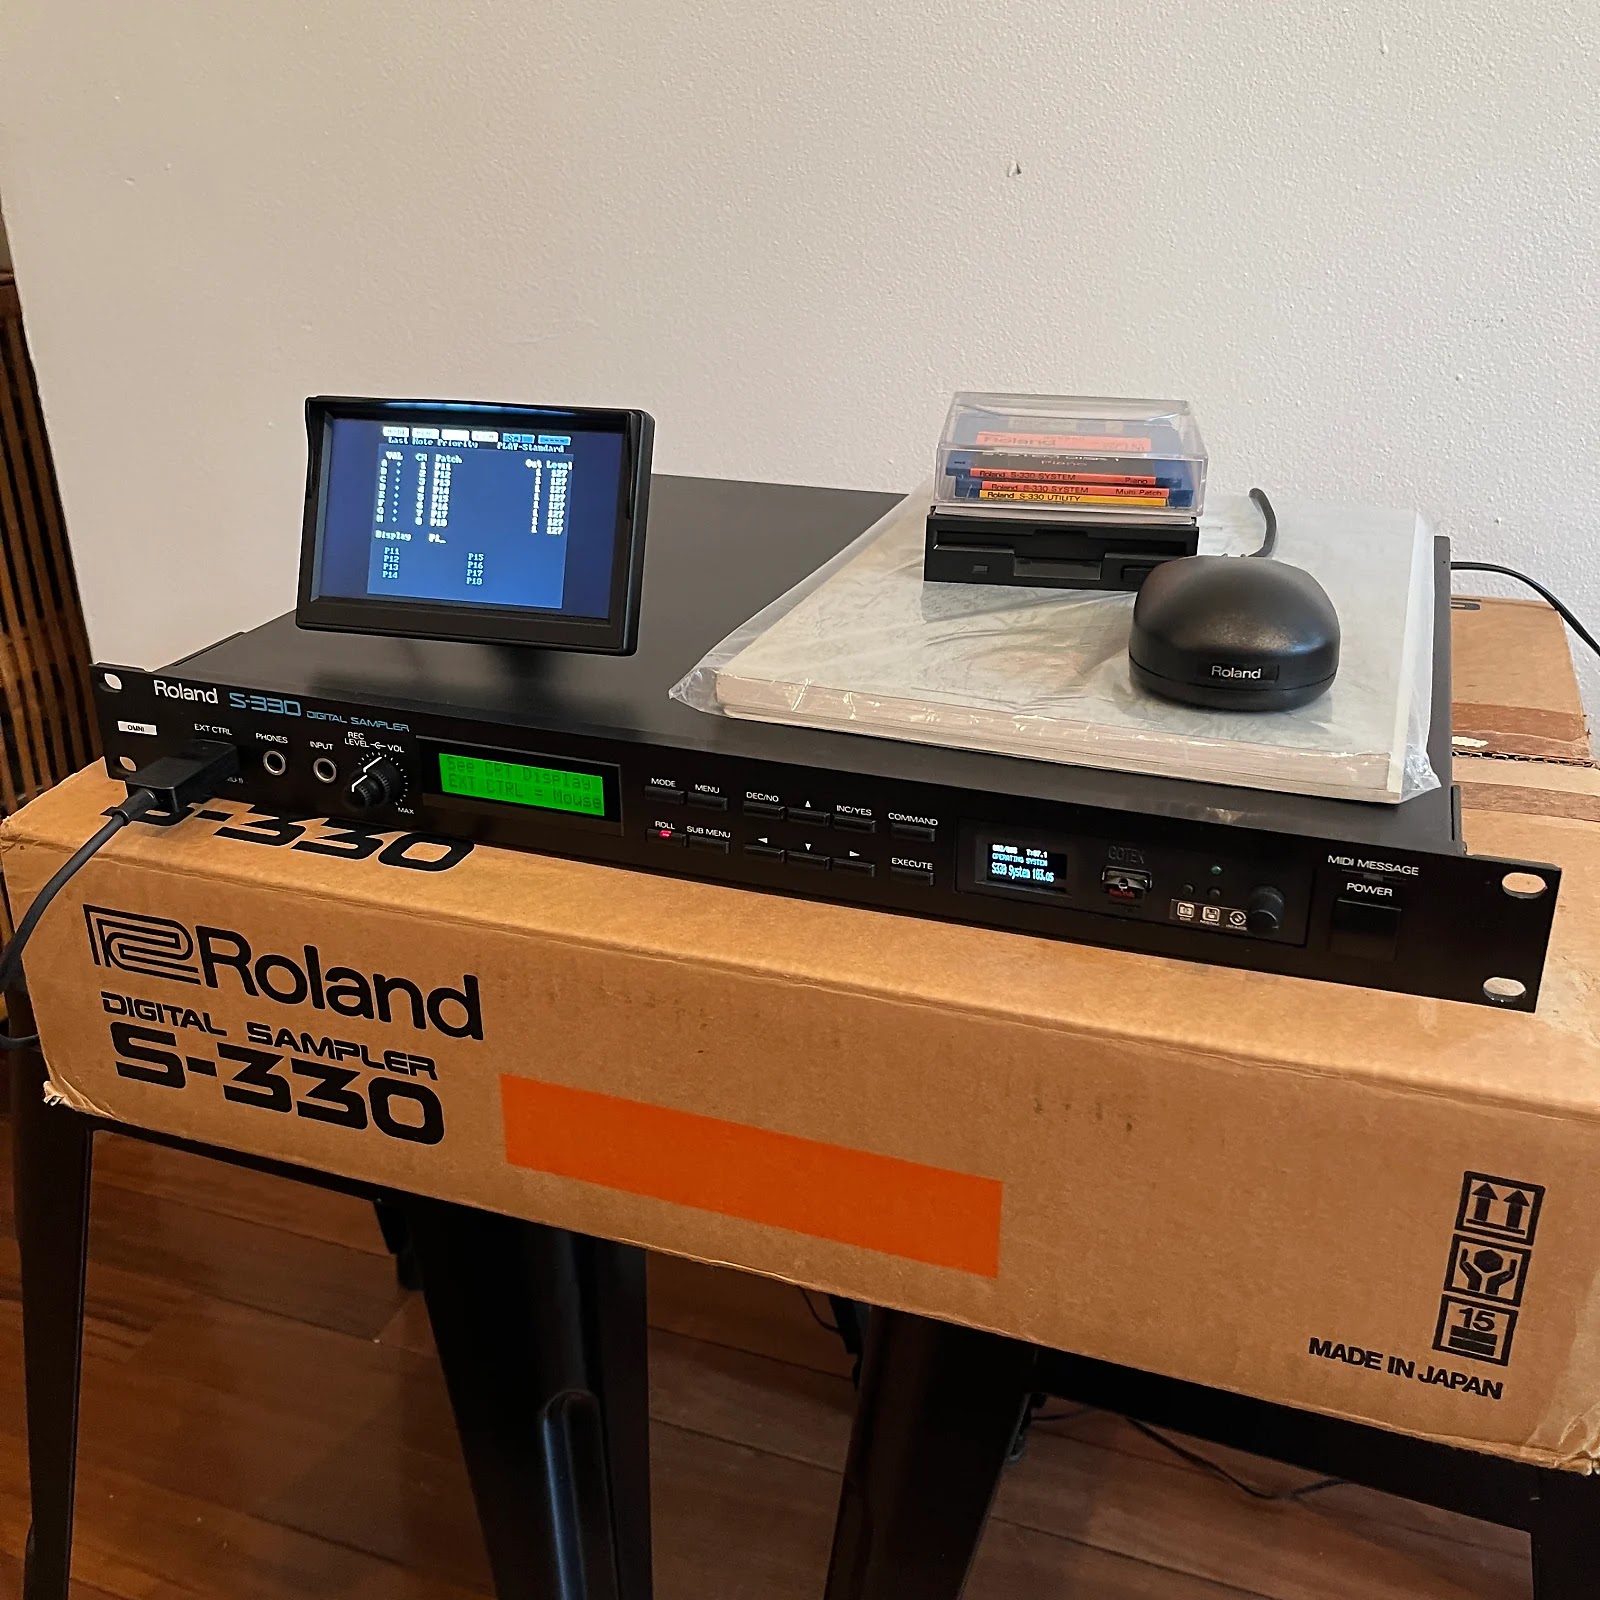 MATRIXSYNTH: Roland S-330 Sampler w/ Original Box, Gotek USB Drive